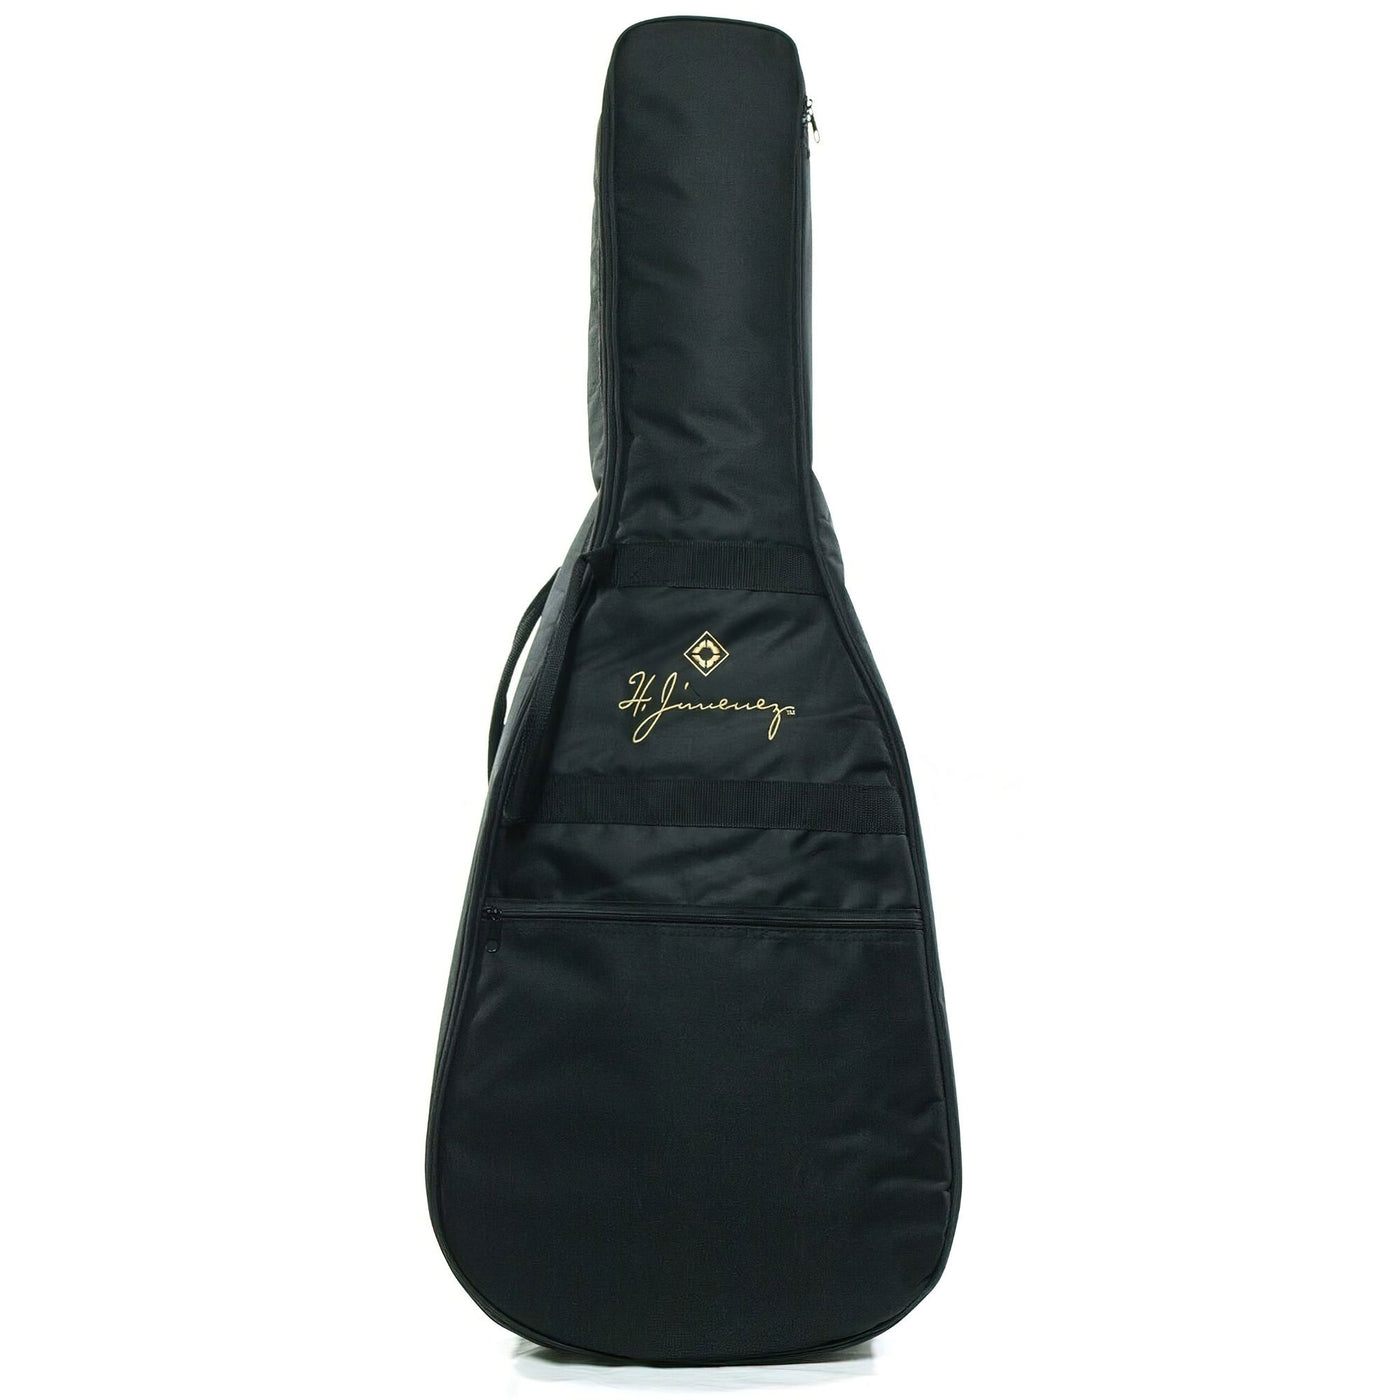 H. Jimenez LG75 Educativo Series 3/4 Size Nylon String Acoustic Guitar with Bag